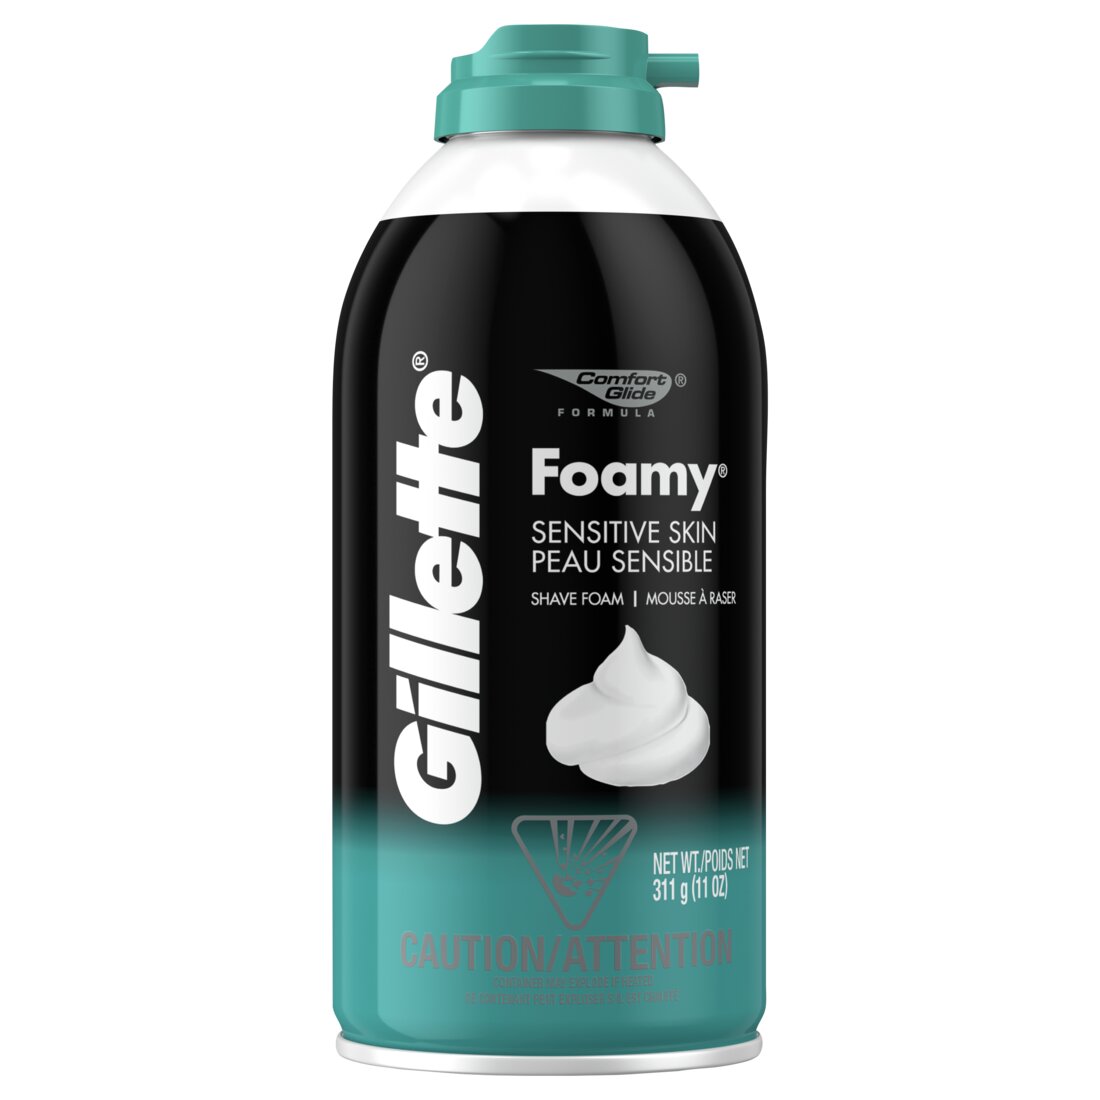 Gillette Foamy Sensitive Shave Foam For Men Sensitive Skin - 11oz/12pk